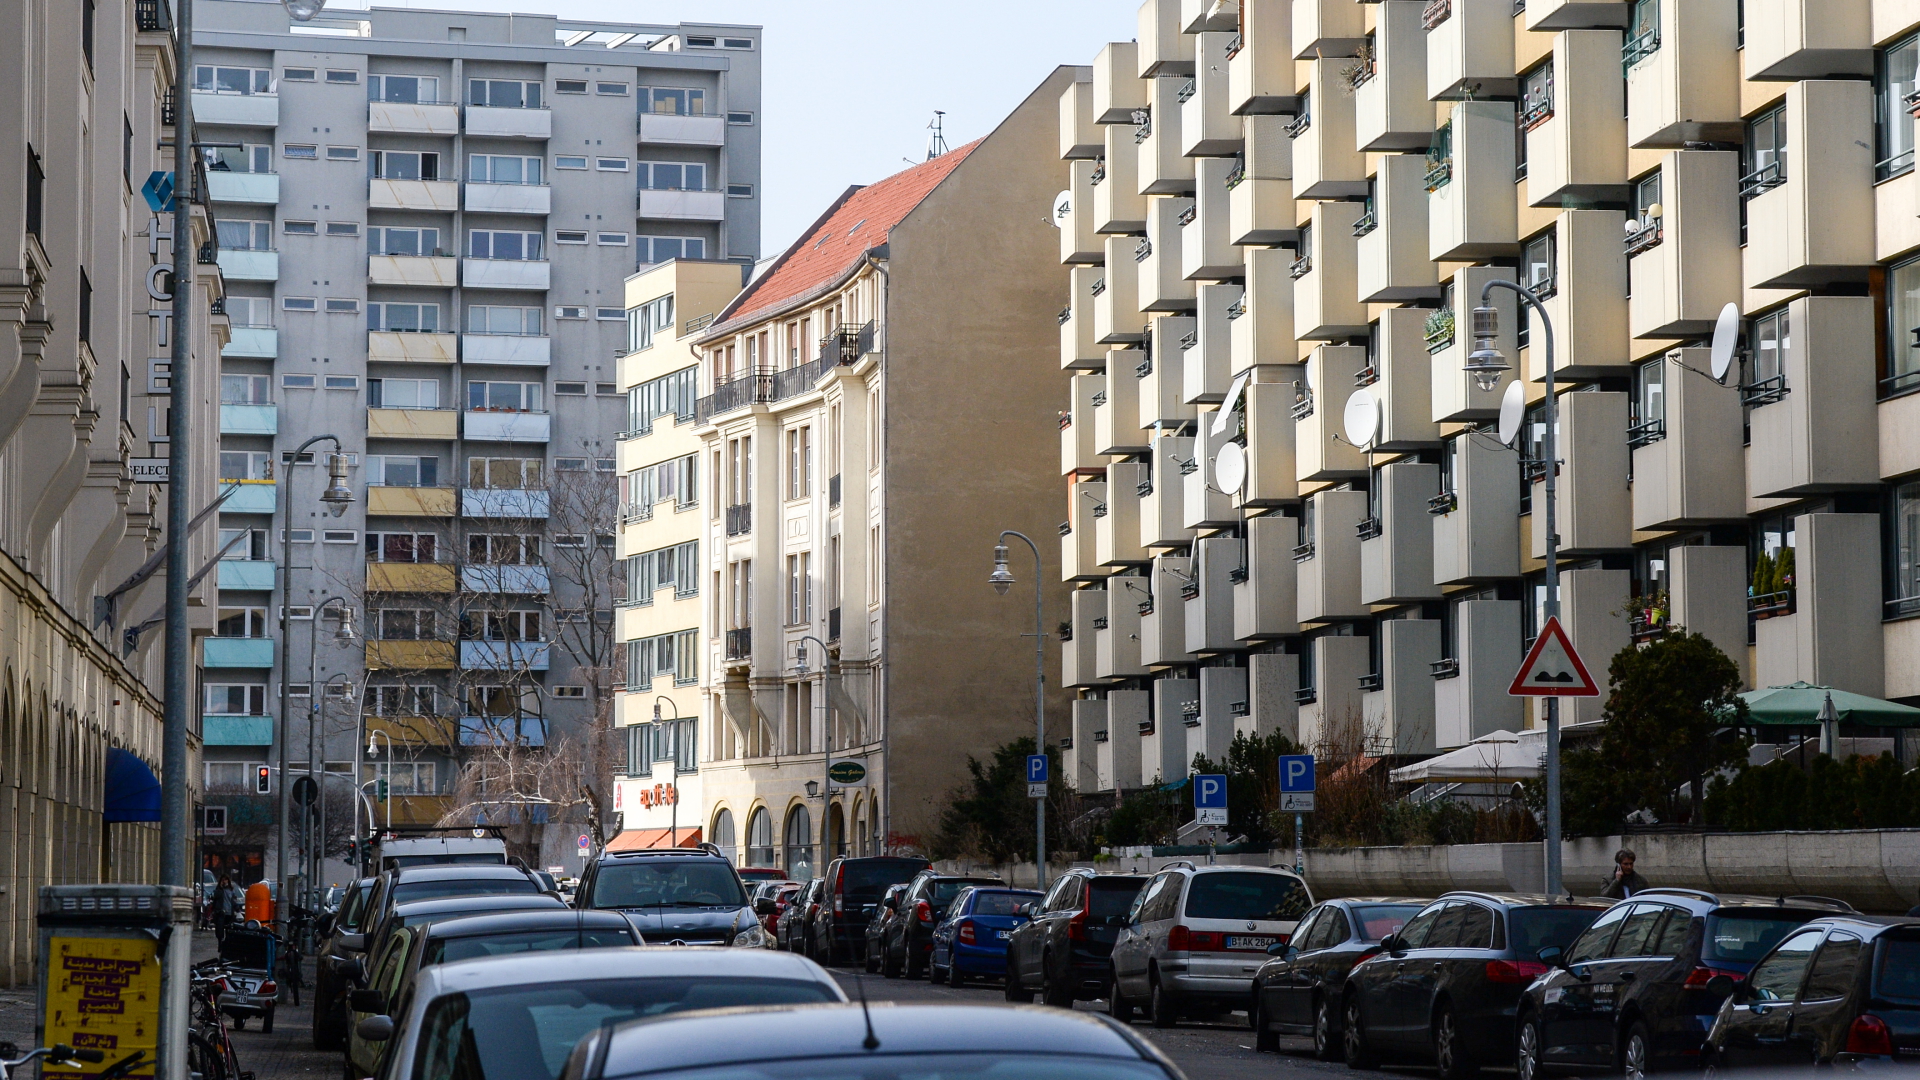 Wohnhäuser in Berlin-Kreuzberg. | dpa